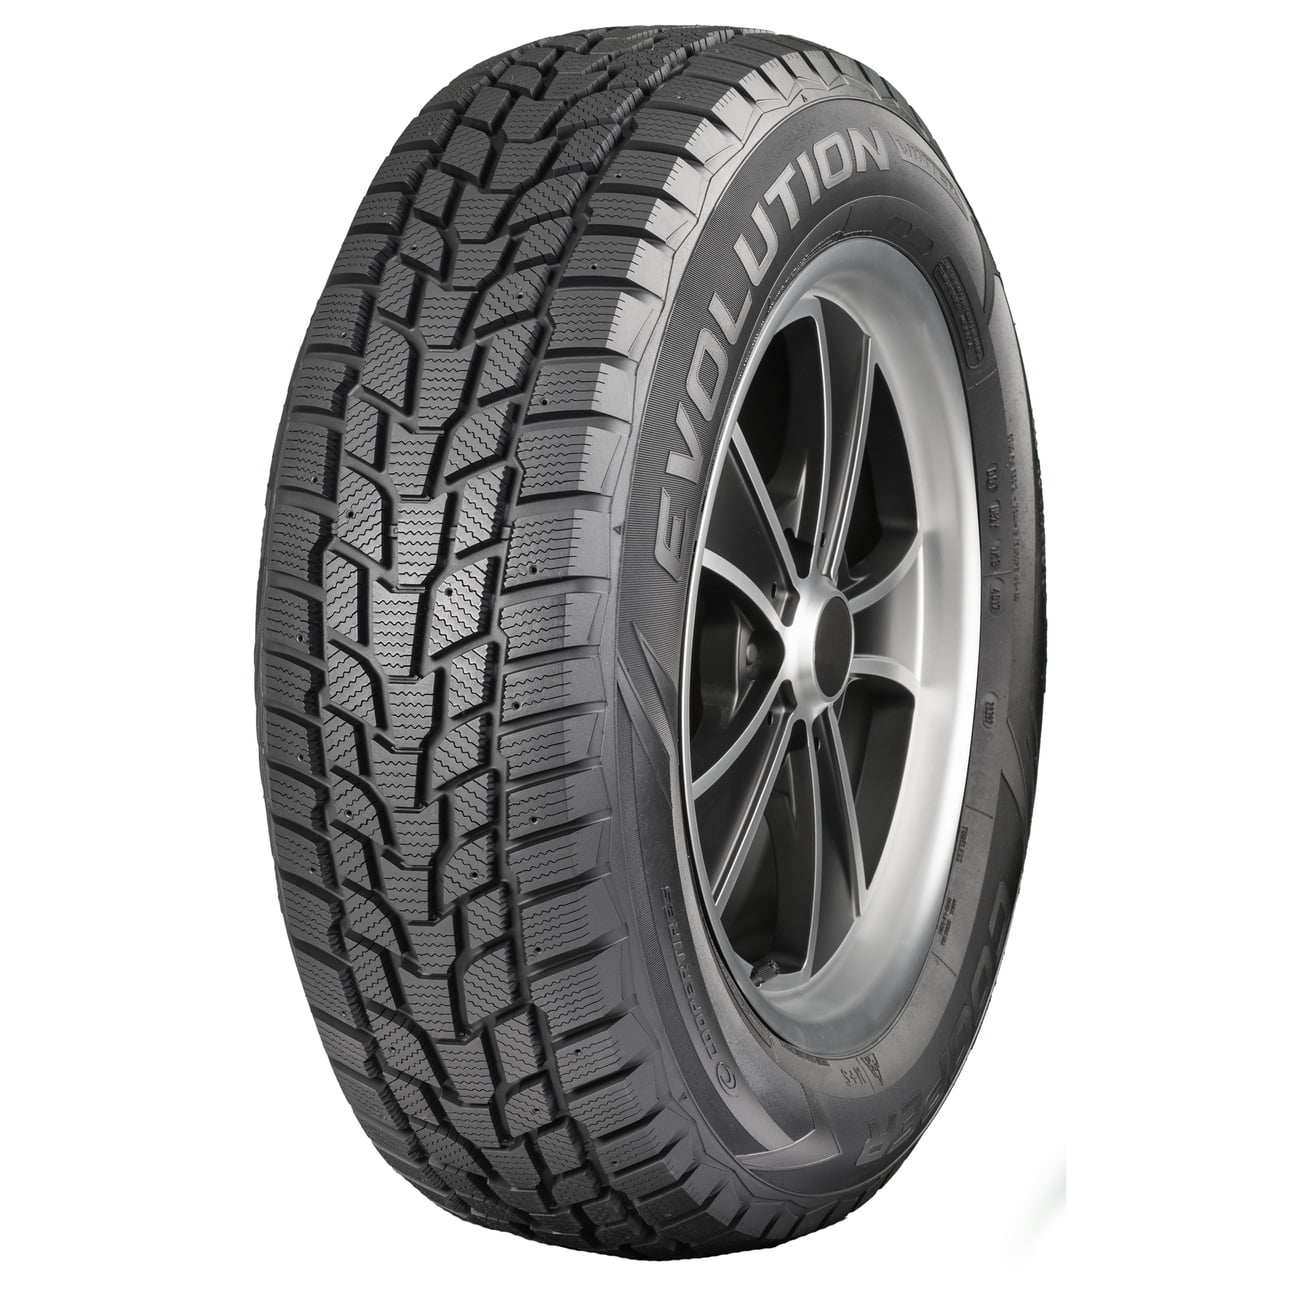 Sumitomo Ice Edge Studable-Winter Radial Tire 215/65R17 99T 